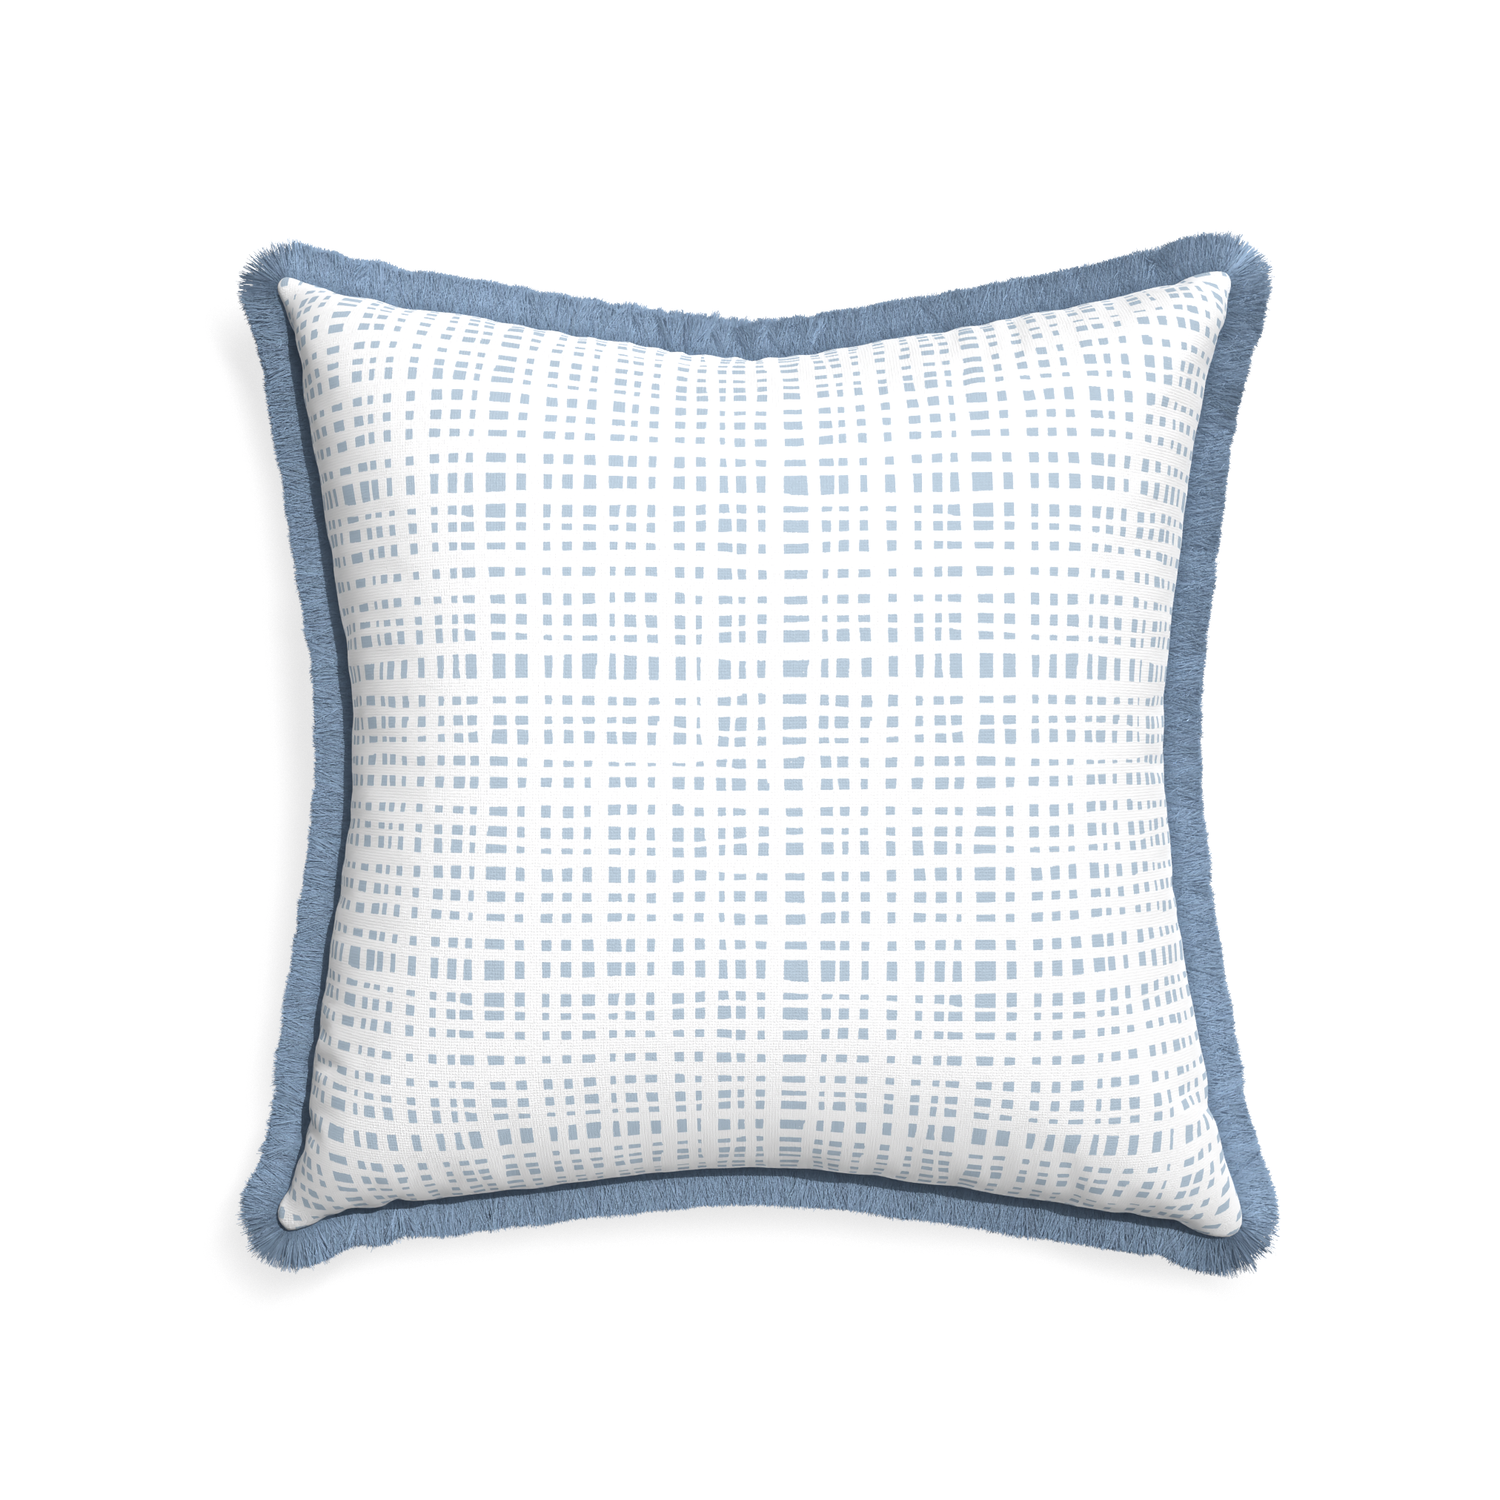 22-square ginger sky custom pillow with sky fringe on white background